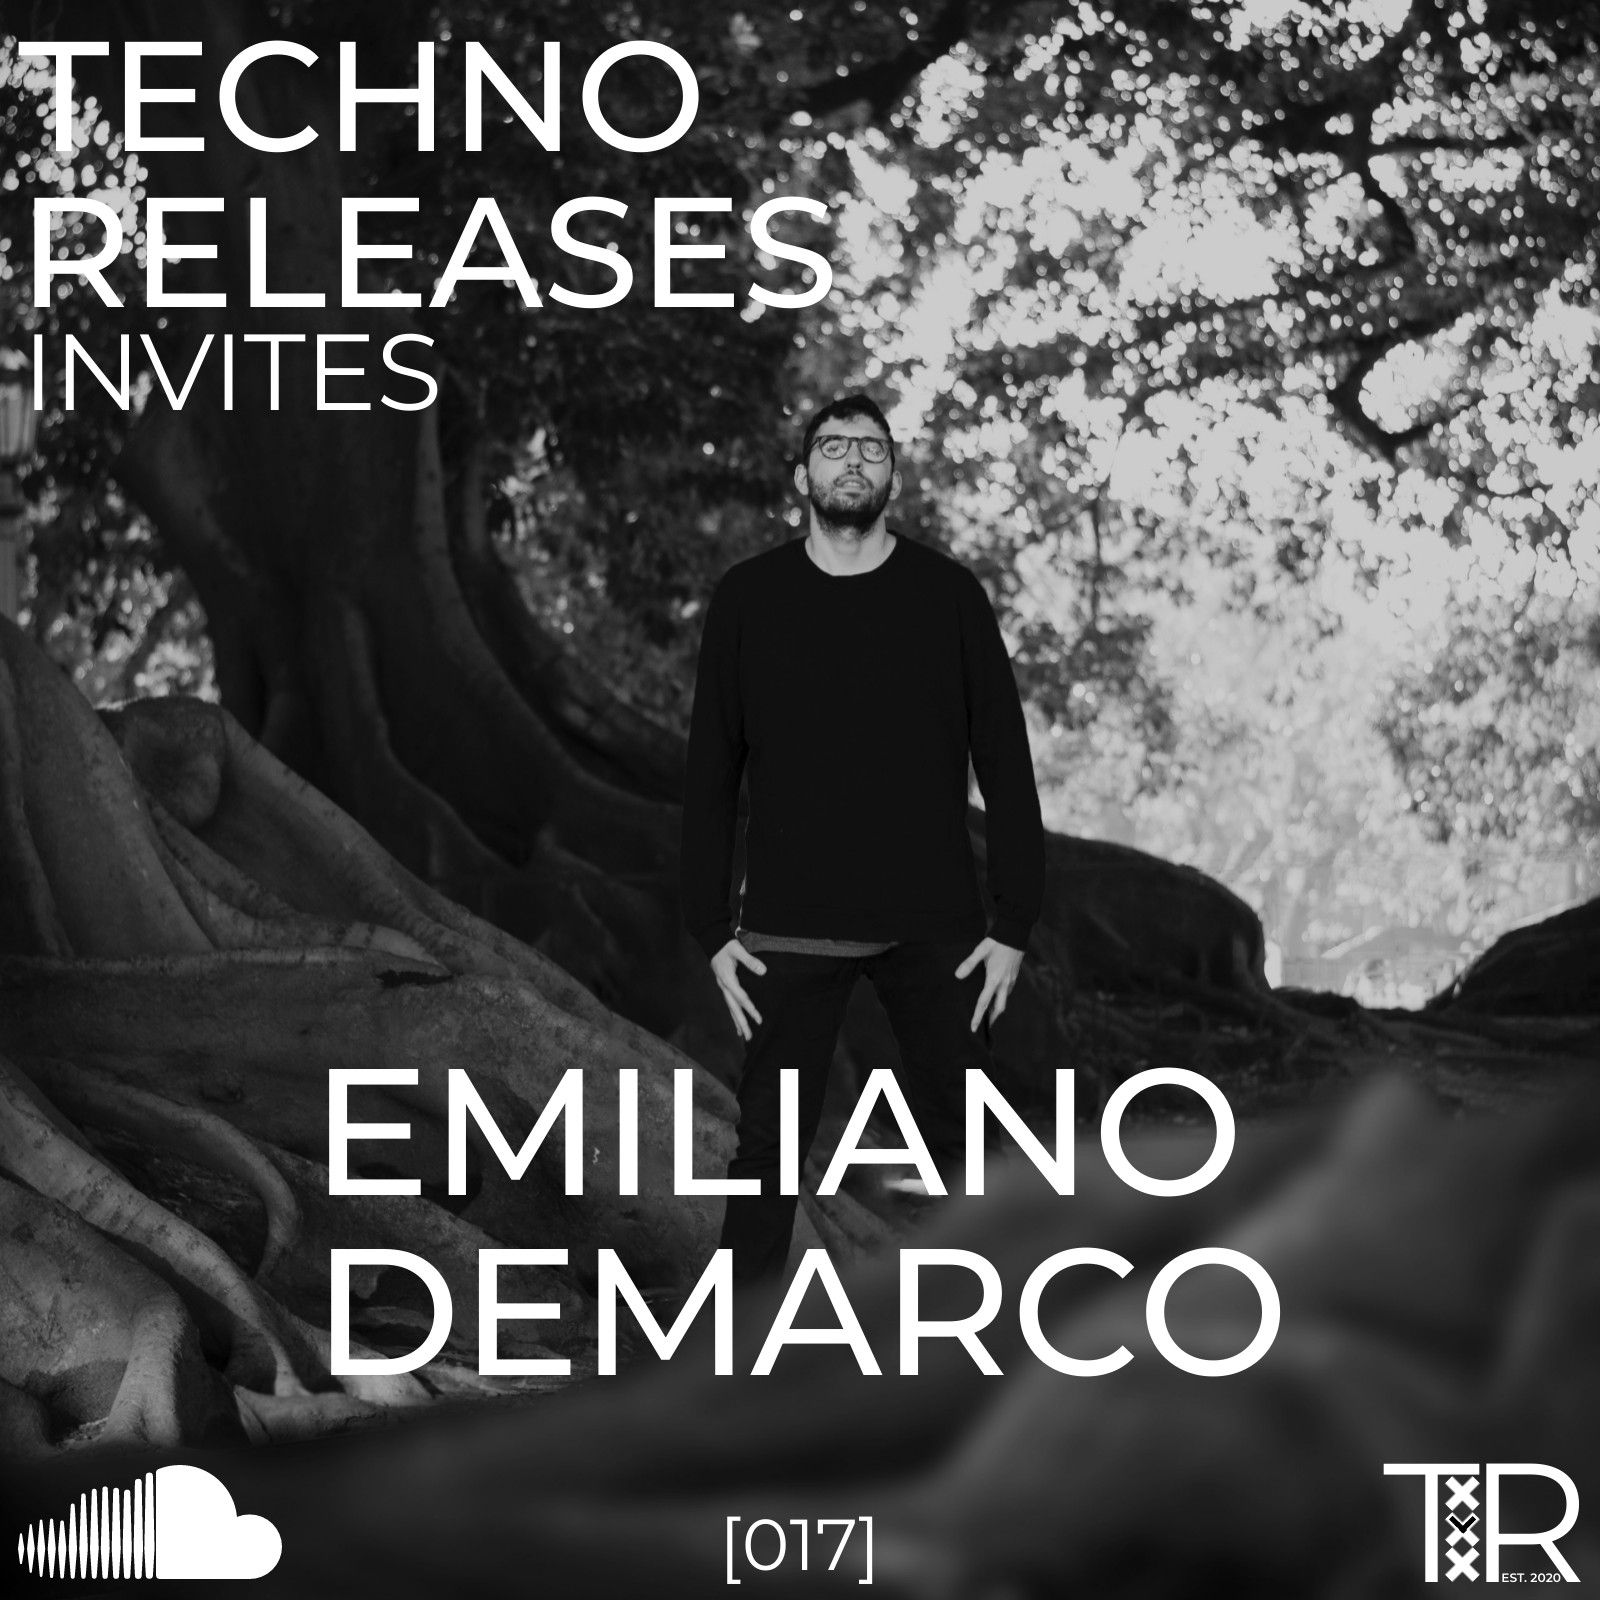 Lawrlwythwch Techno Releases Invites Emiliano Demarco - [017]